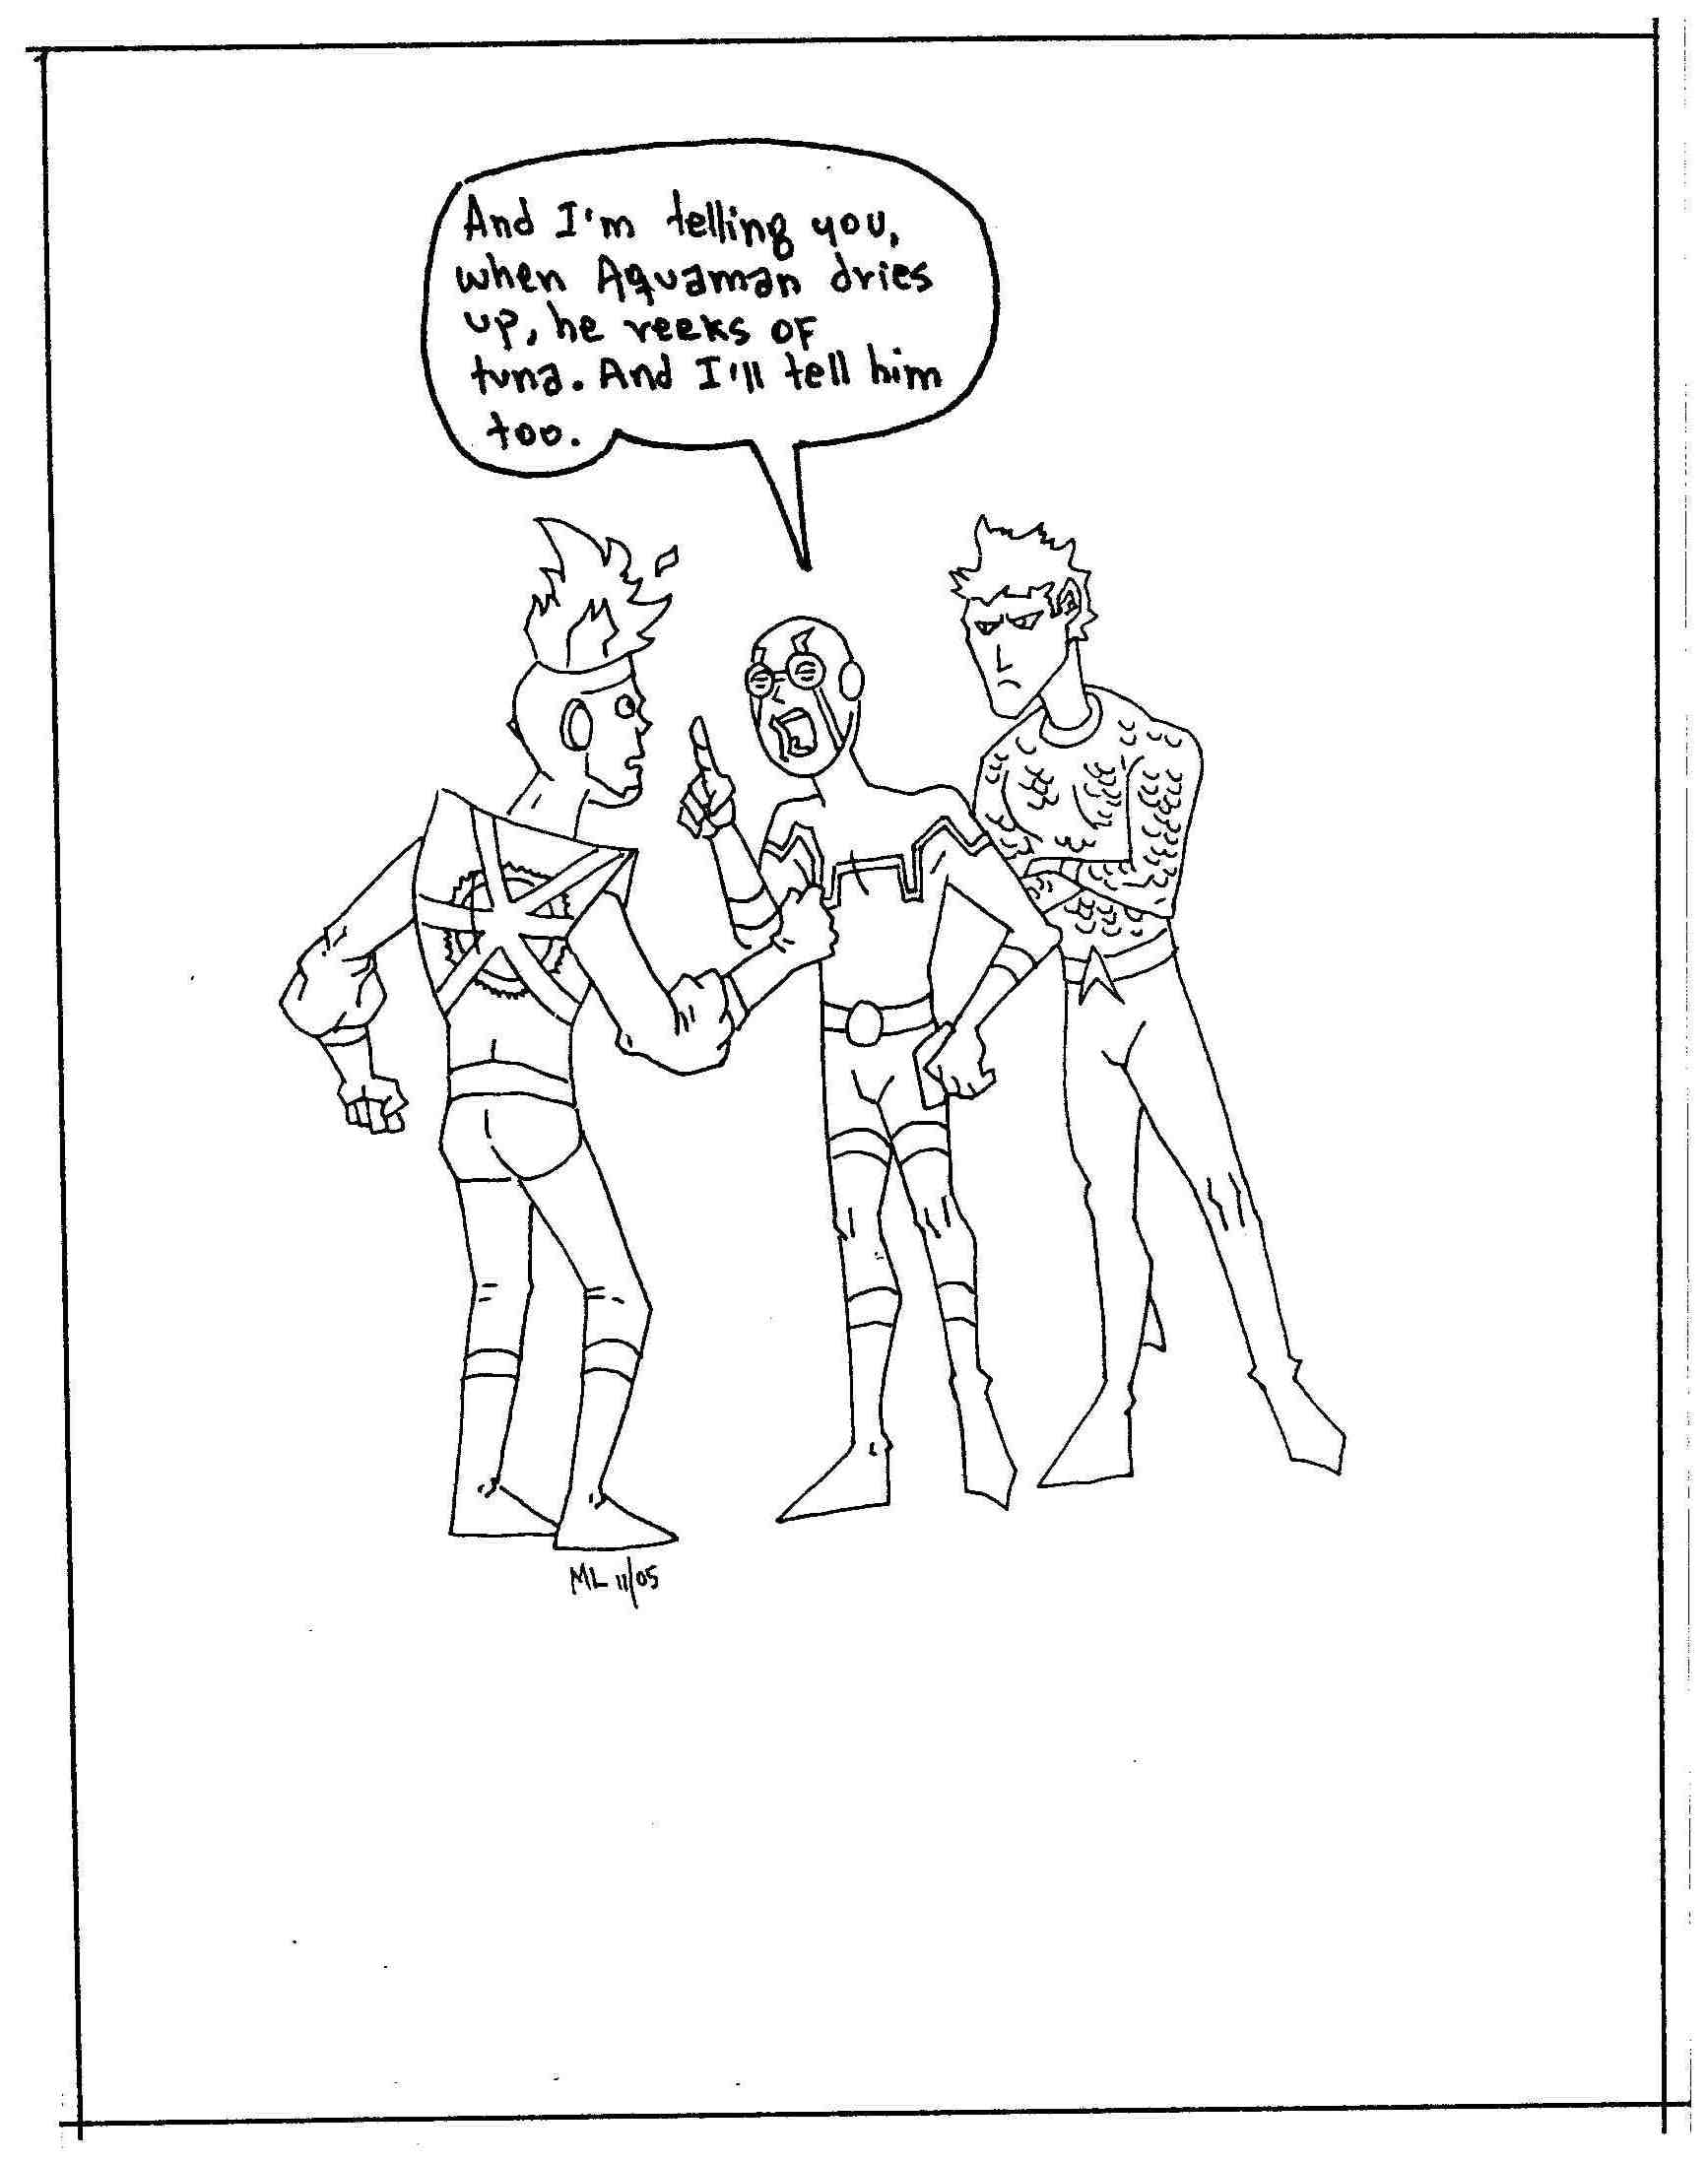 Superhero gossip by Arthurcurry